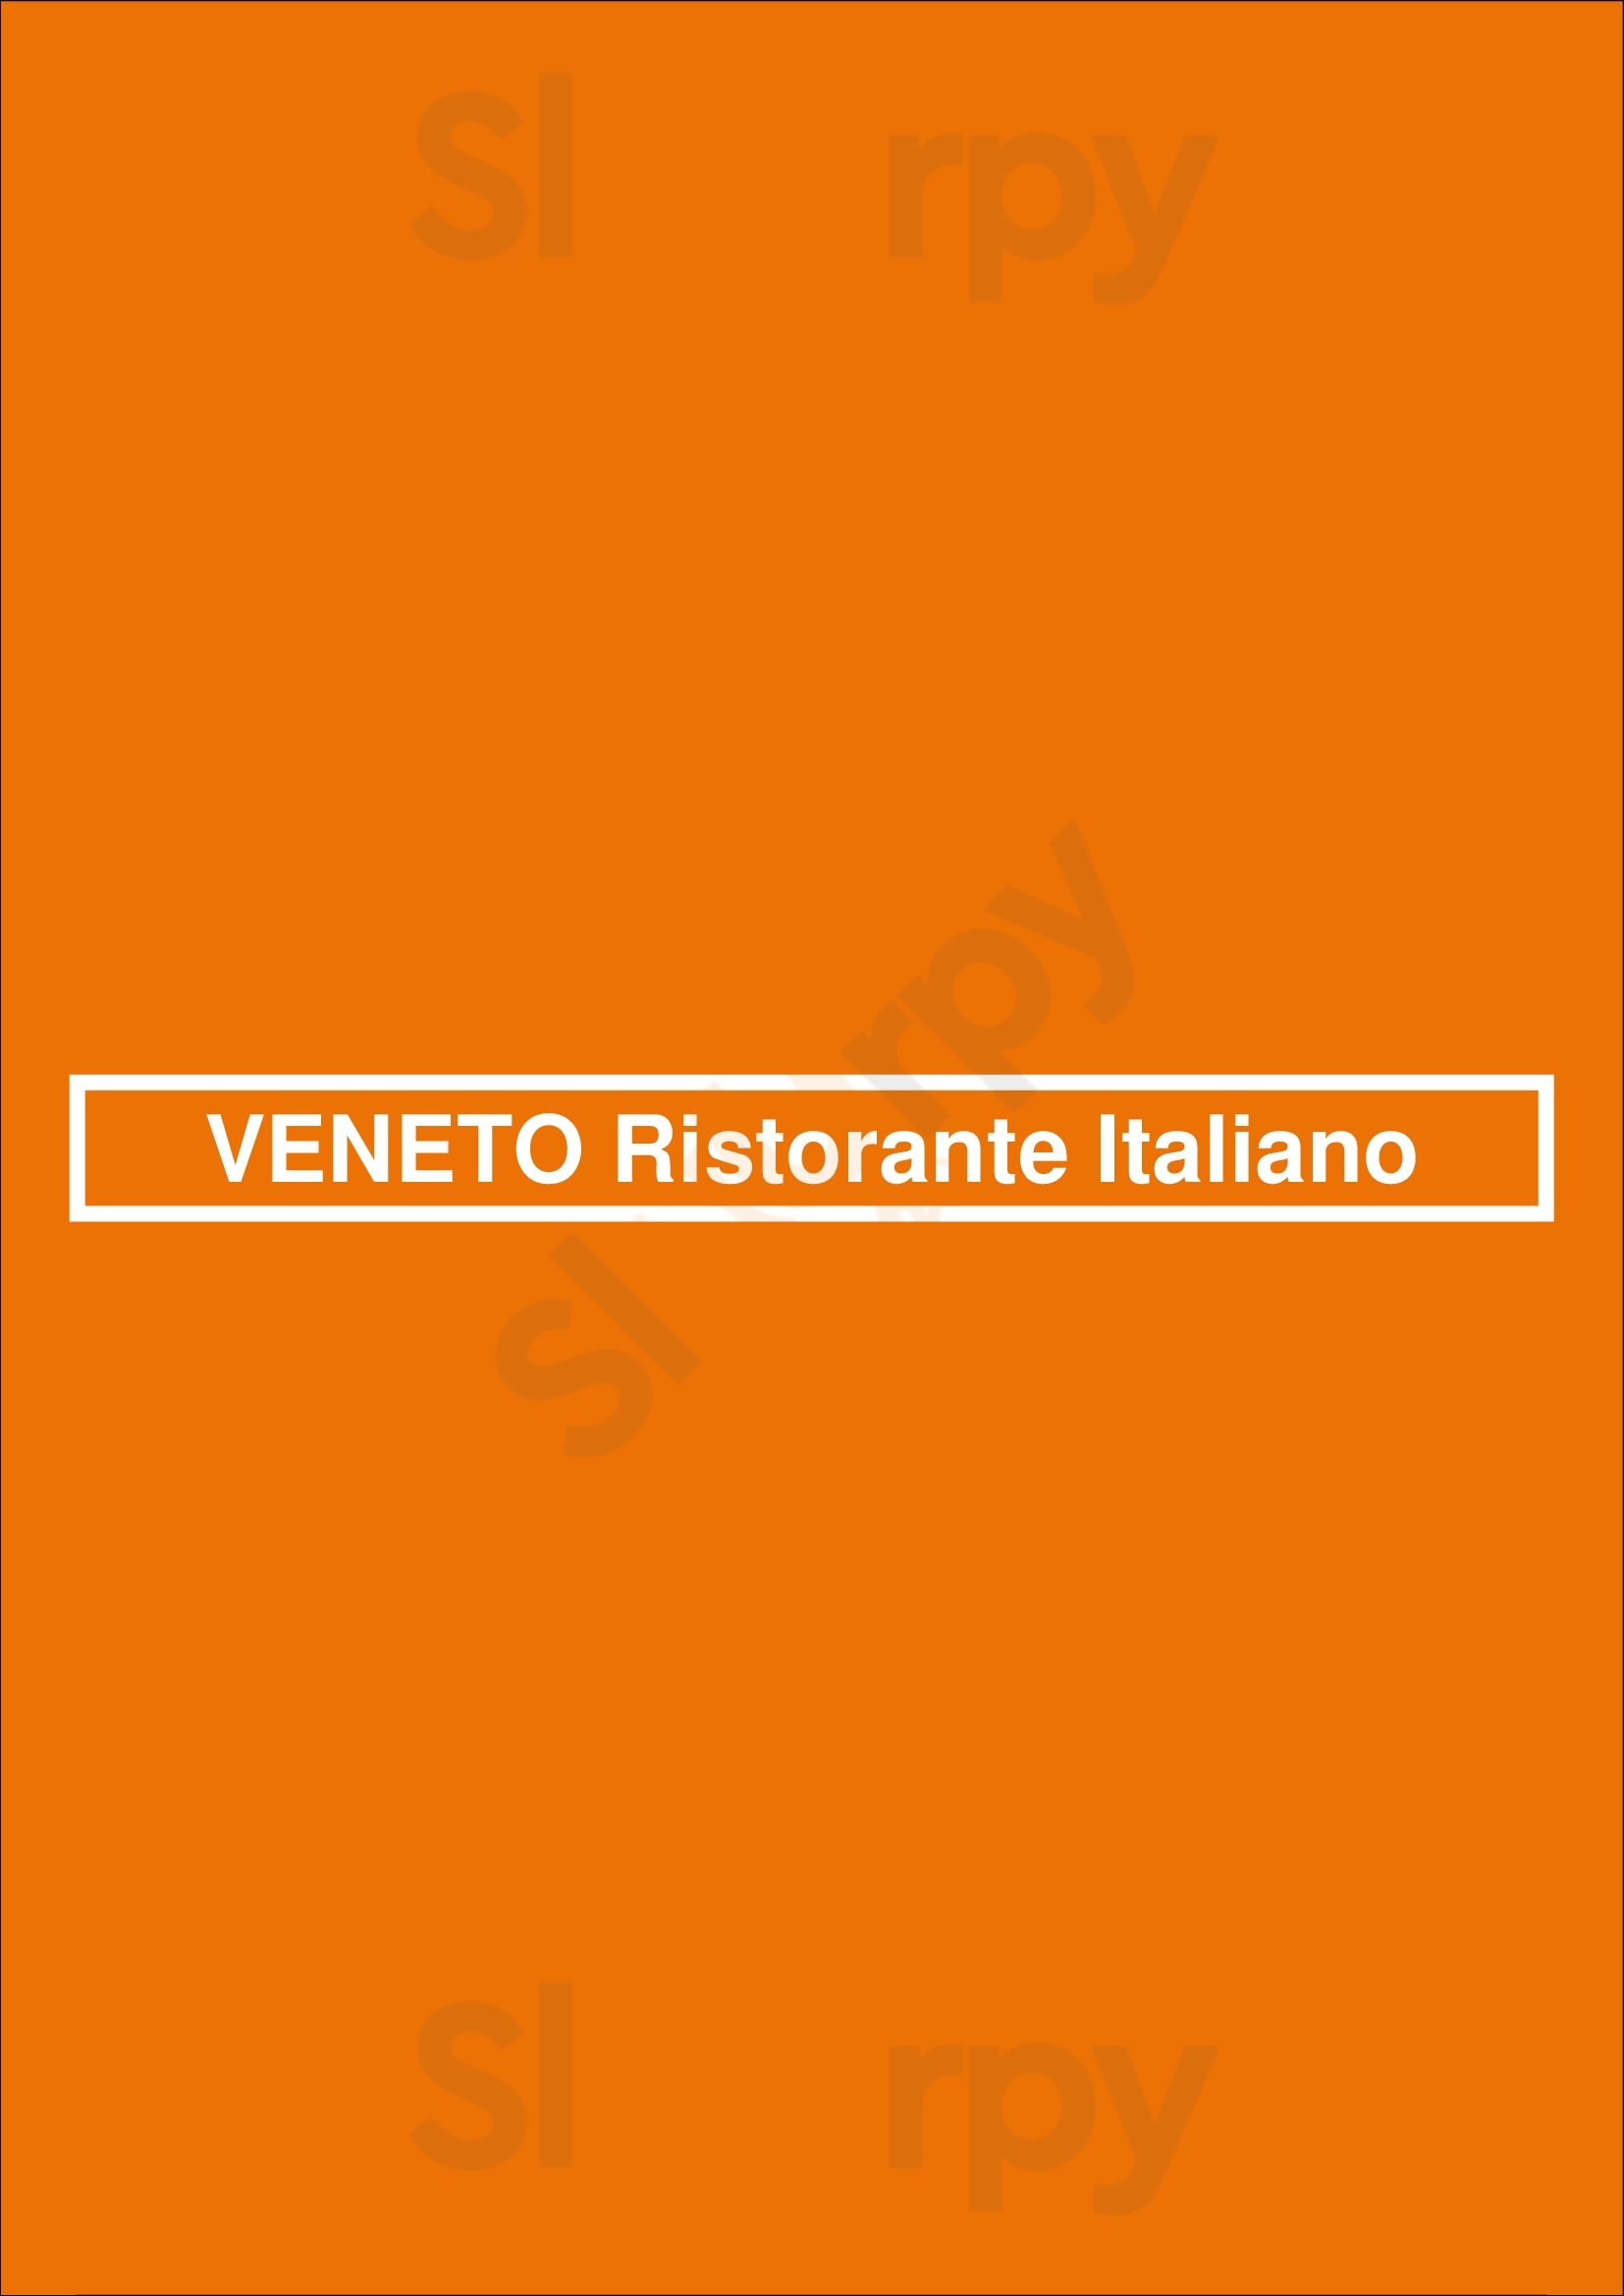 Veneto Ristorante Italiano Salt Lake City Menu - 1